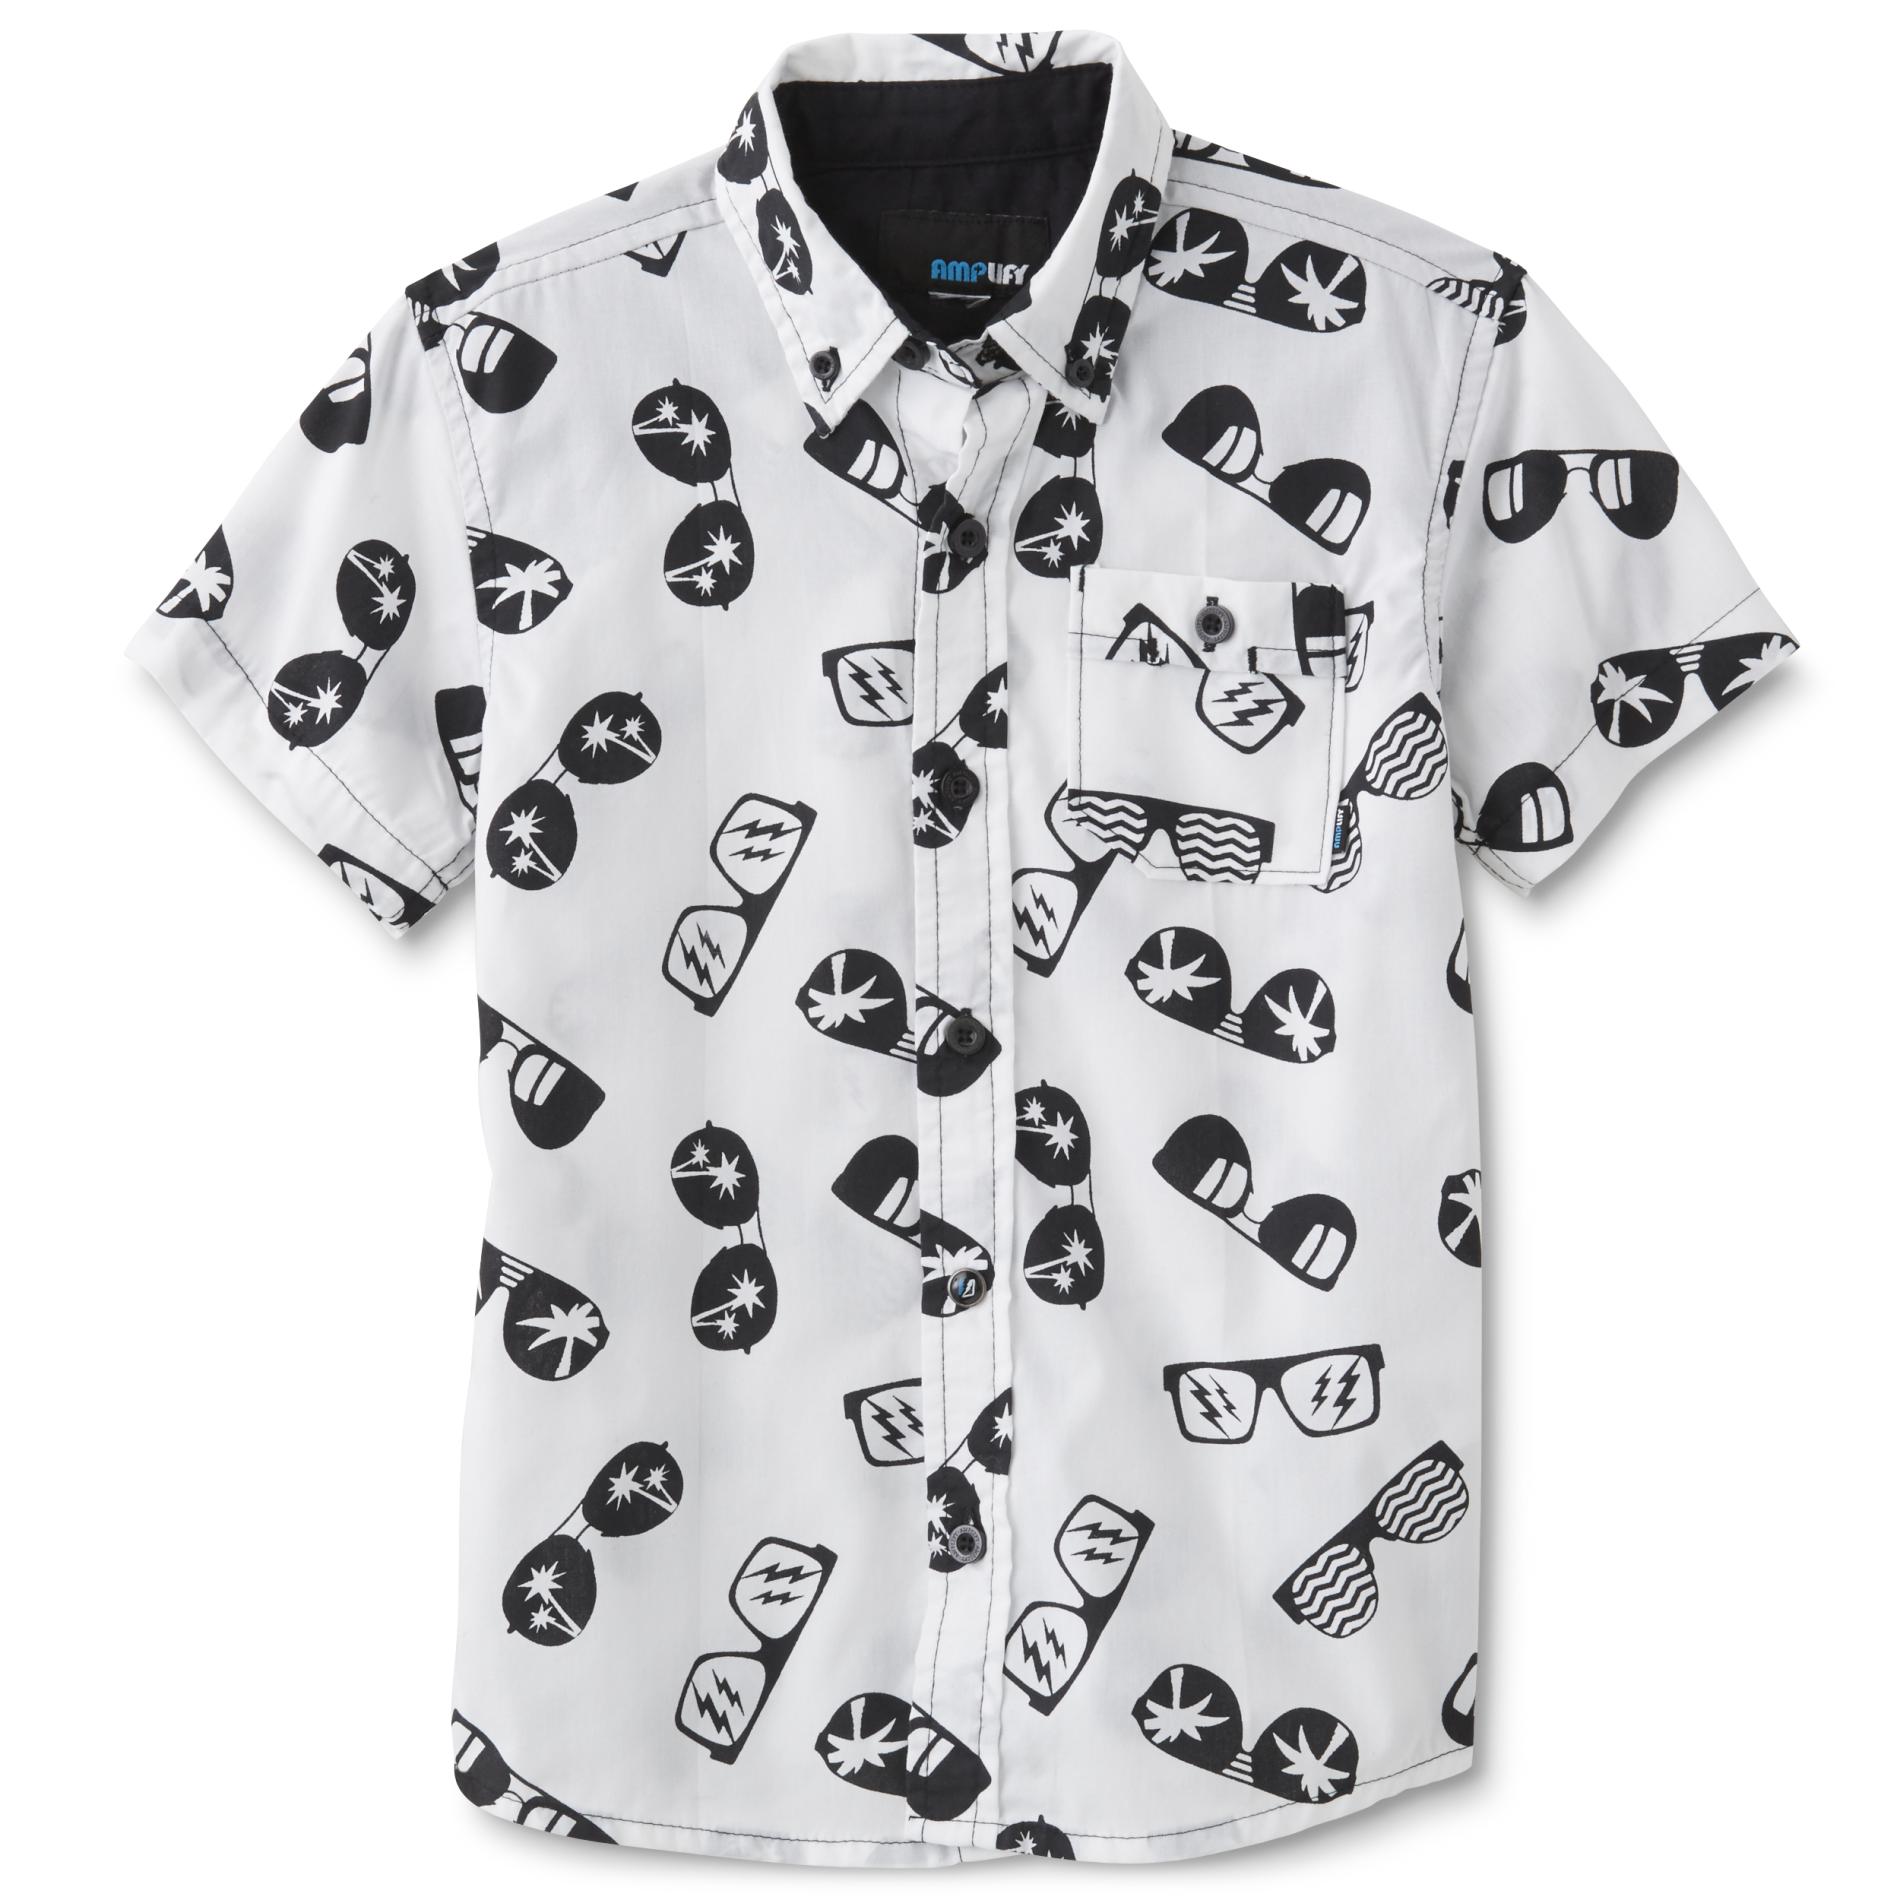 Amplify Boys' Button-Front Shirt - Sunglasses